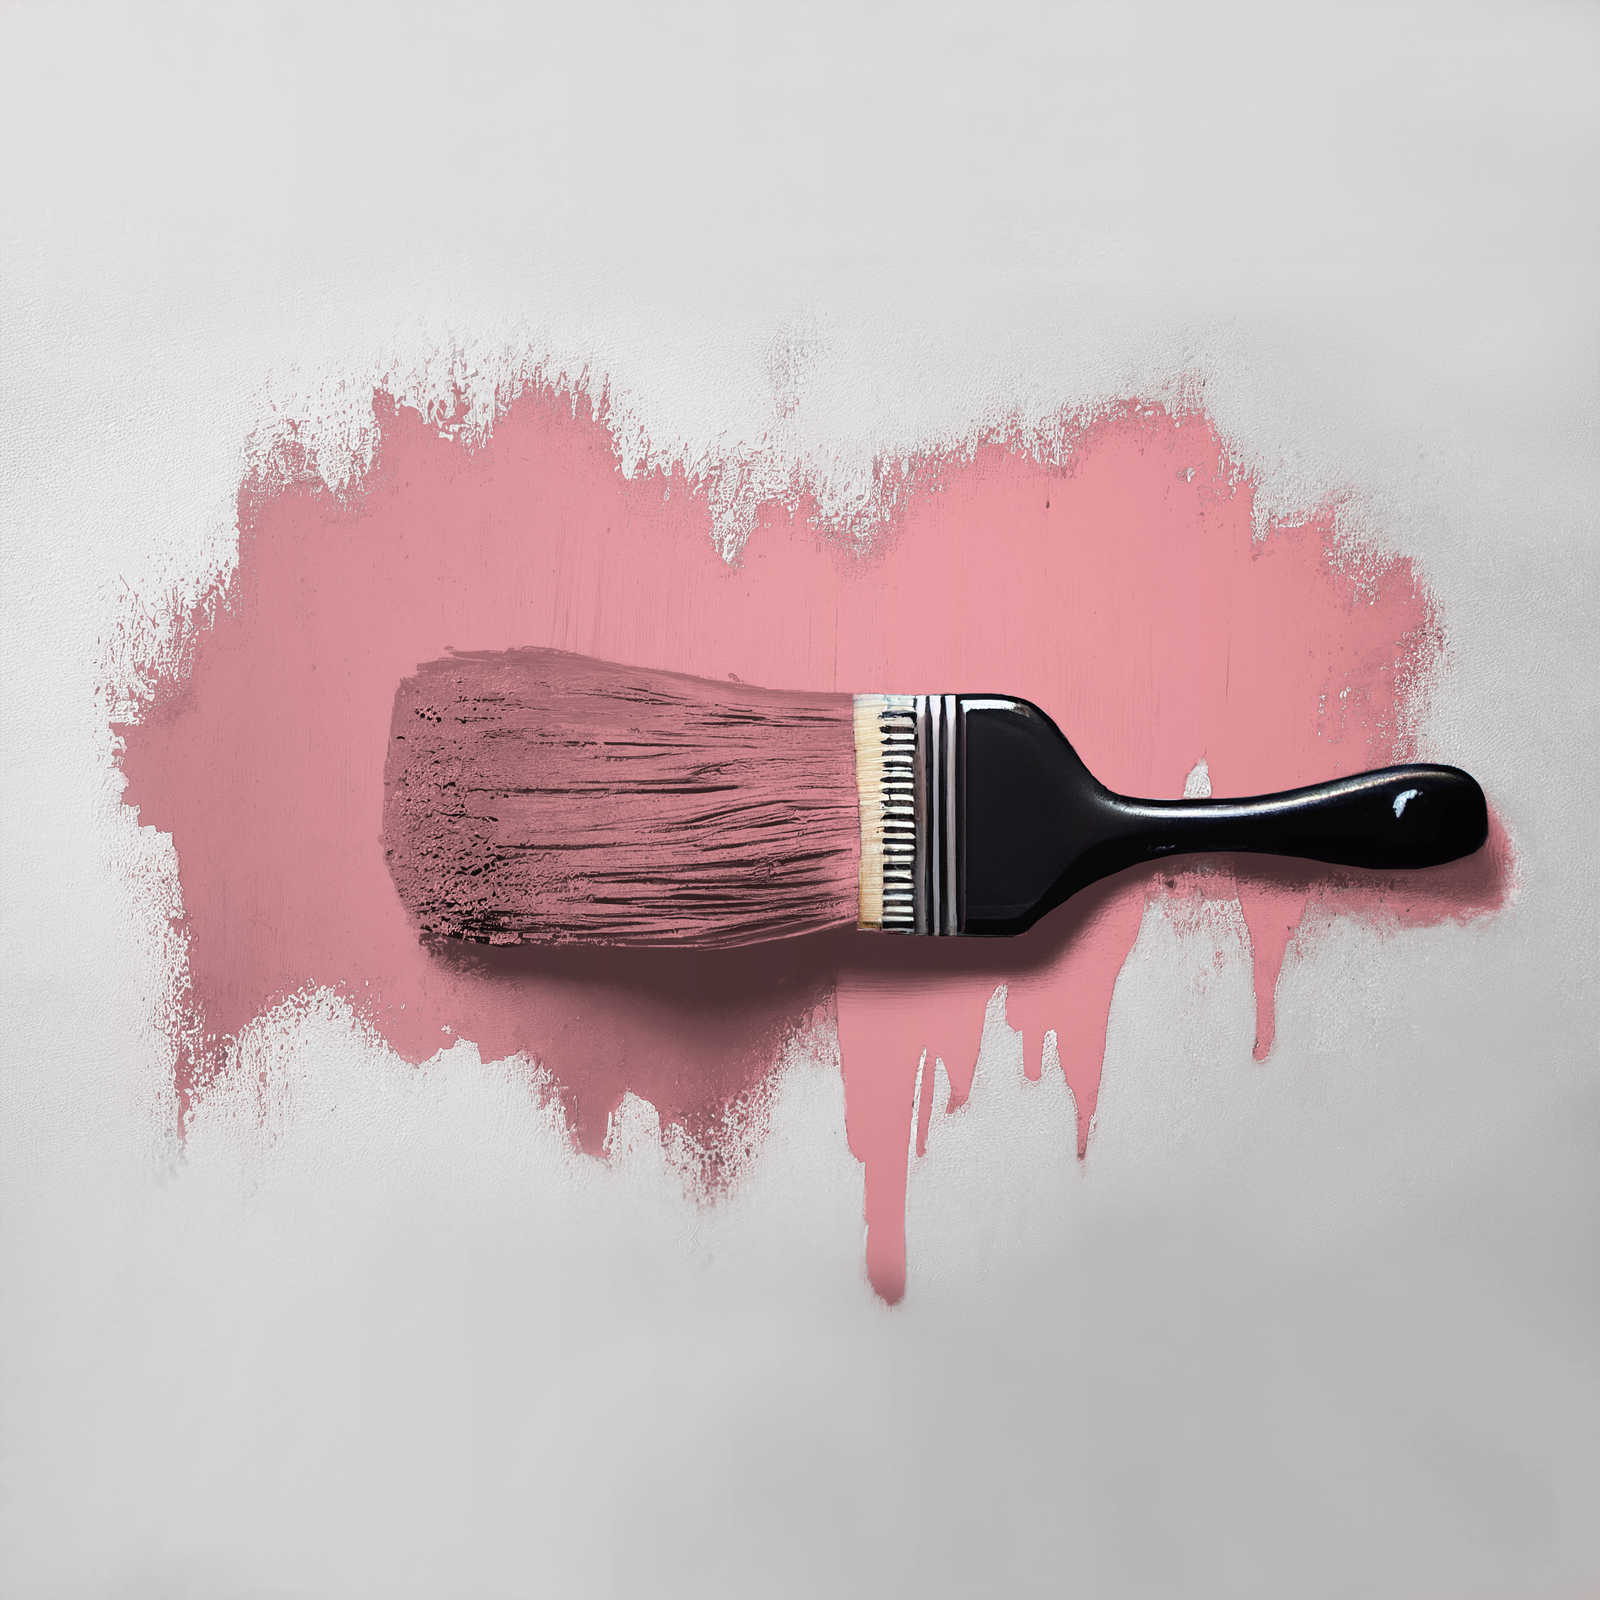             Peinture murale TCK7010 »Masterfully Macaron« en rose vif – 5,0 litres
        